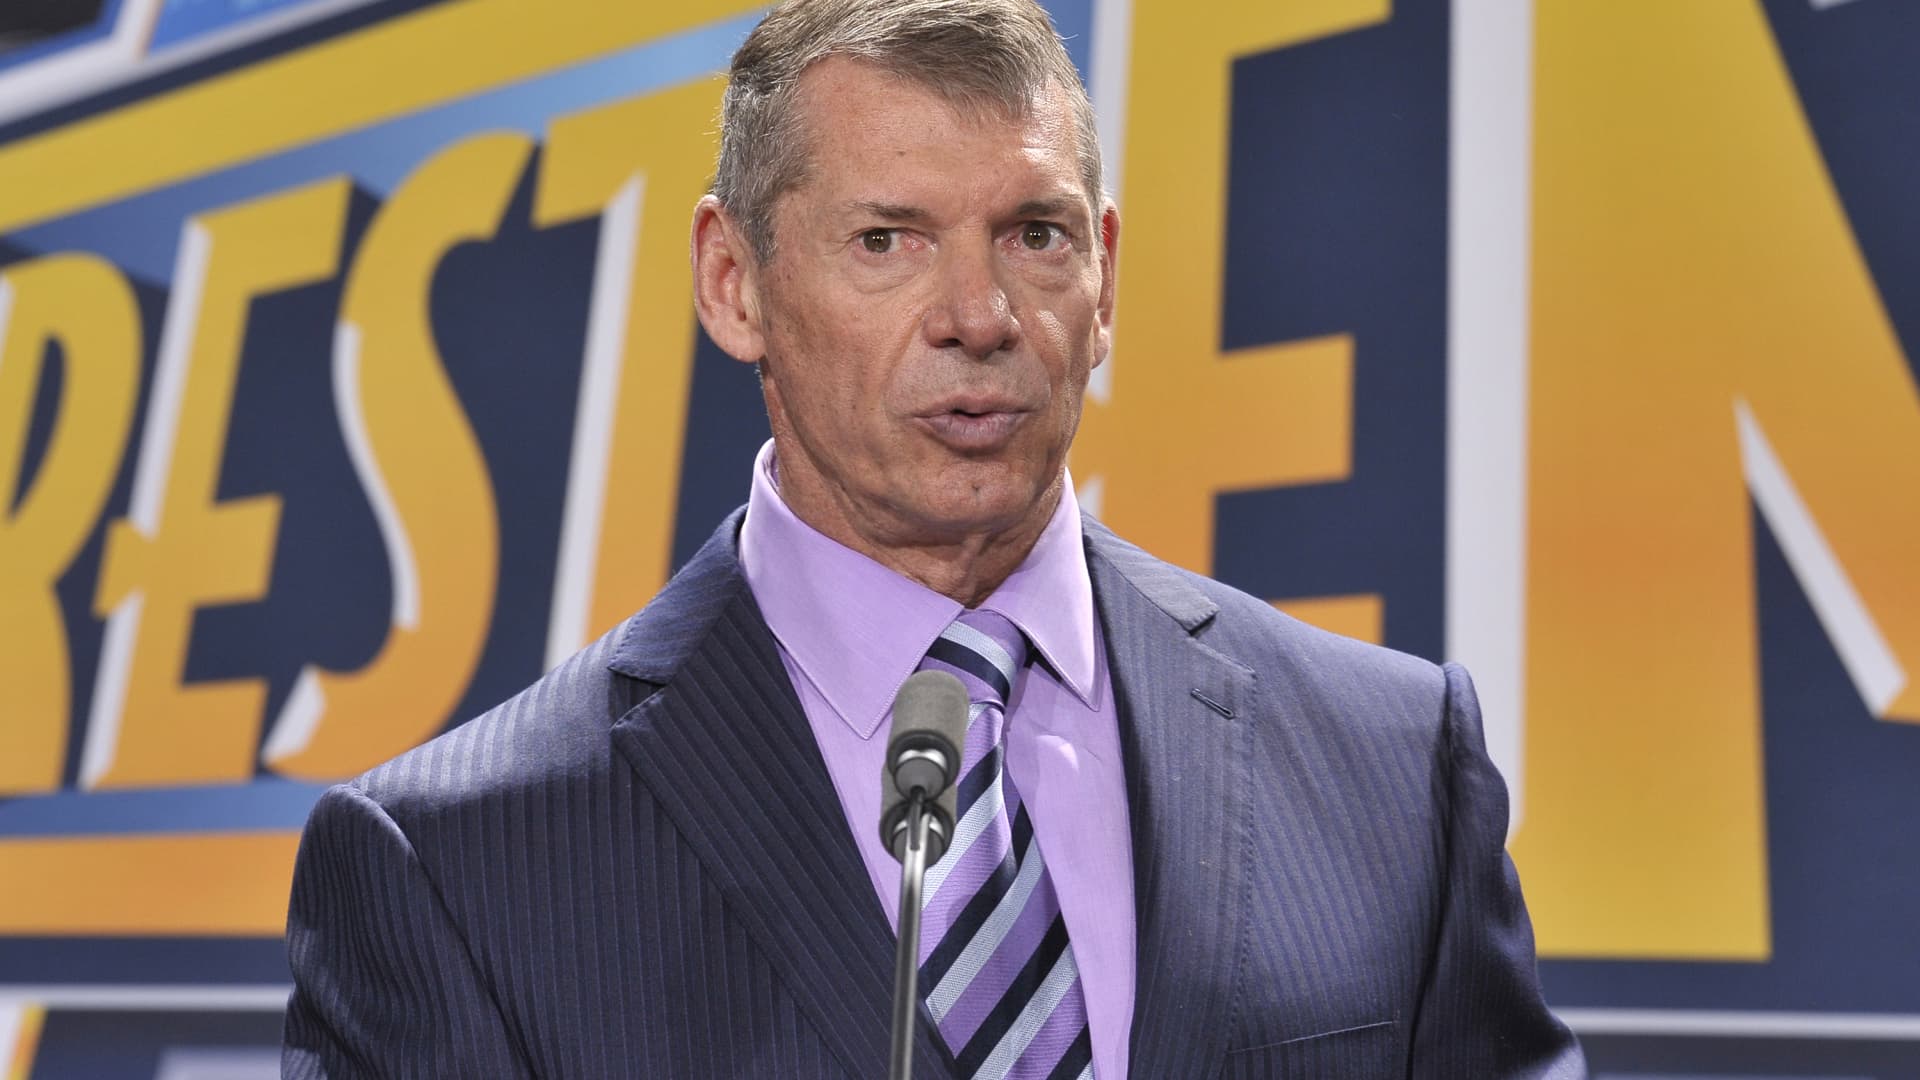 WWE board investigates secret $3 million hush payment by CEO Vince McMahon, repo..